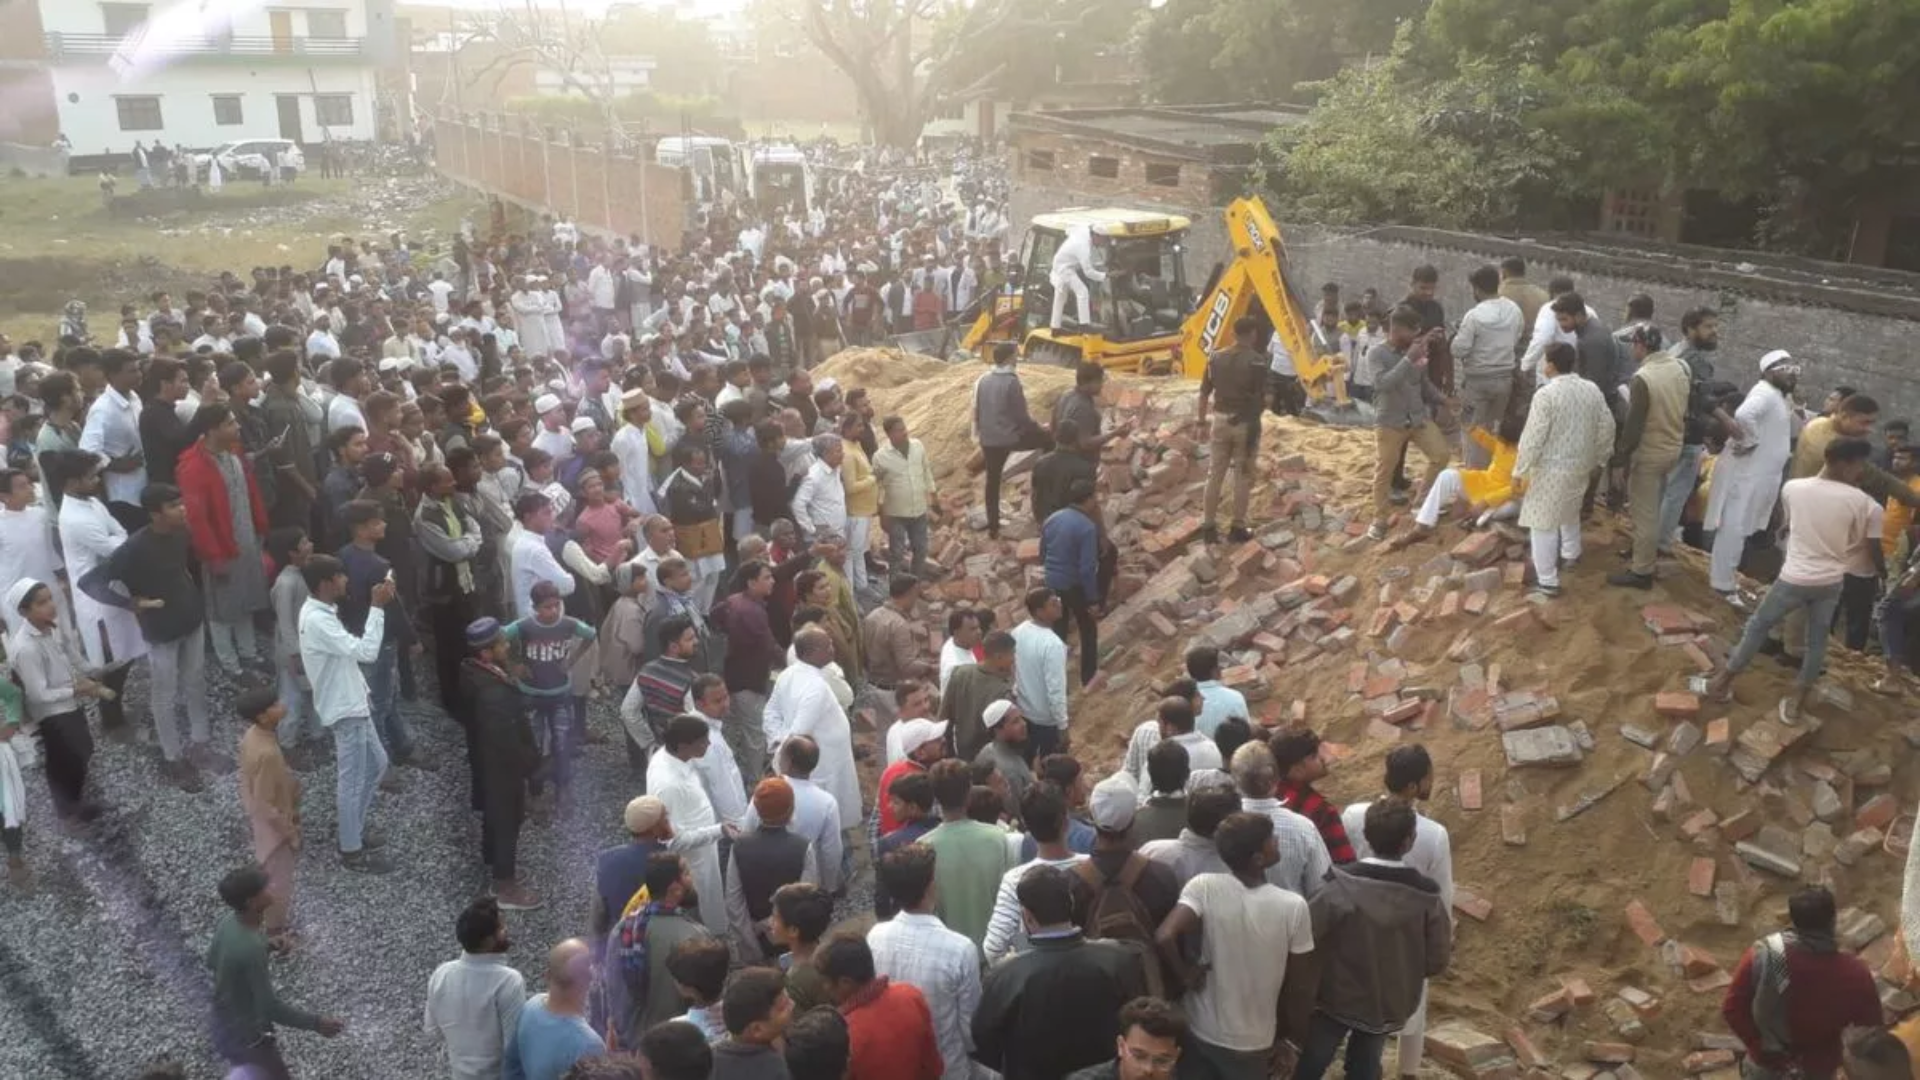 Mau District Wall Collapse; CM Yogi Announces Compensation for Victims